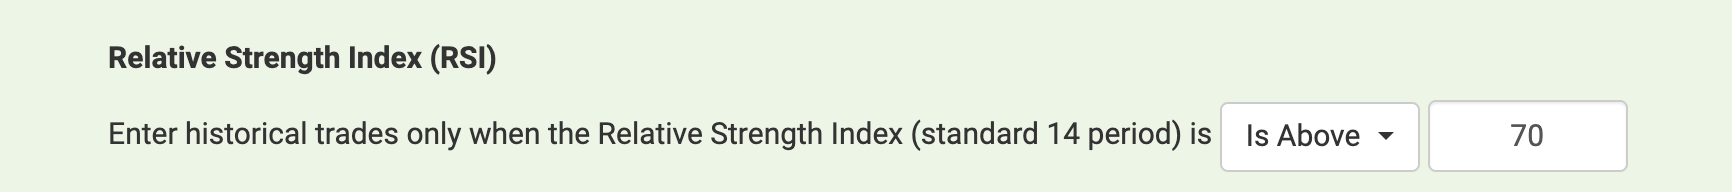 Relative Strength Index Screenshot